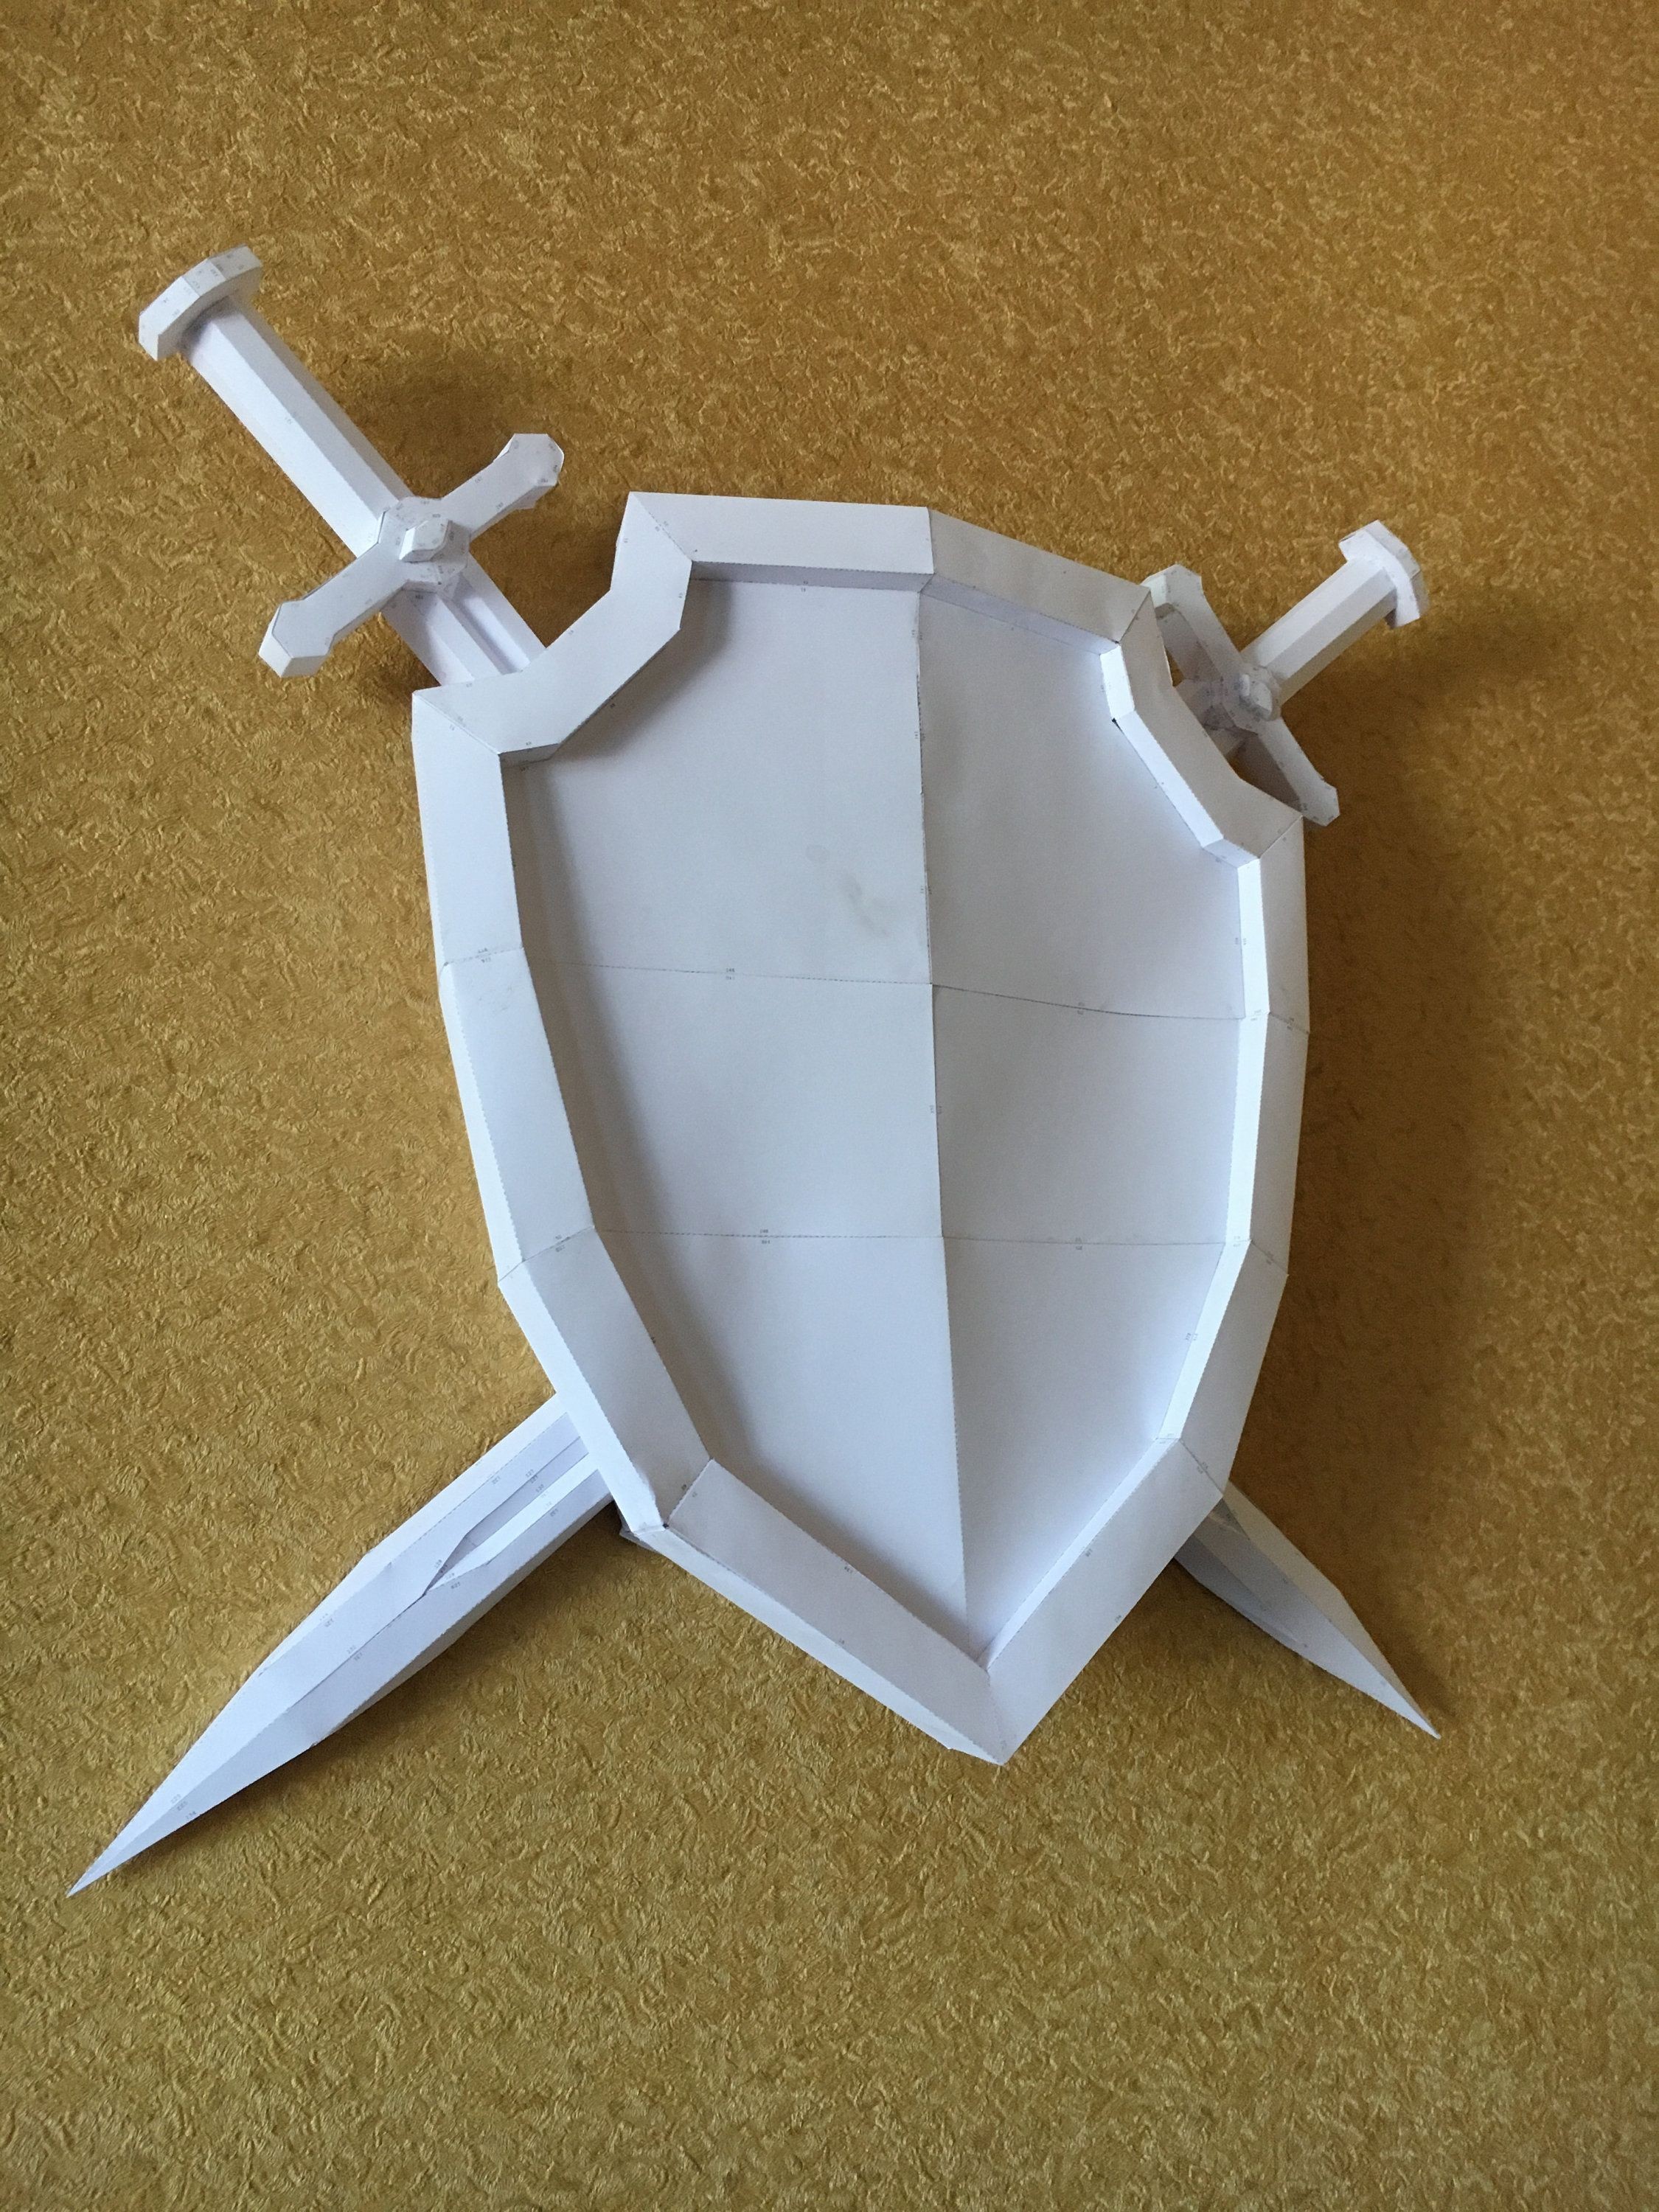 Life Size Papercraft Sword Shield Diy Papercraft Model ÐÑÐ¼Ð°Ð¶Ð½ÑÐµ Ð¸Ð·Ð´ÐµÐ Ð¸Ñ